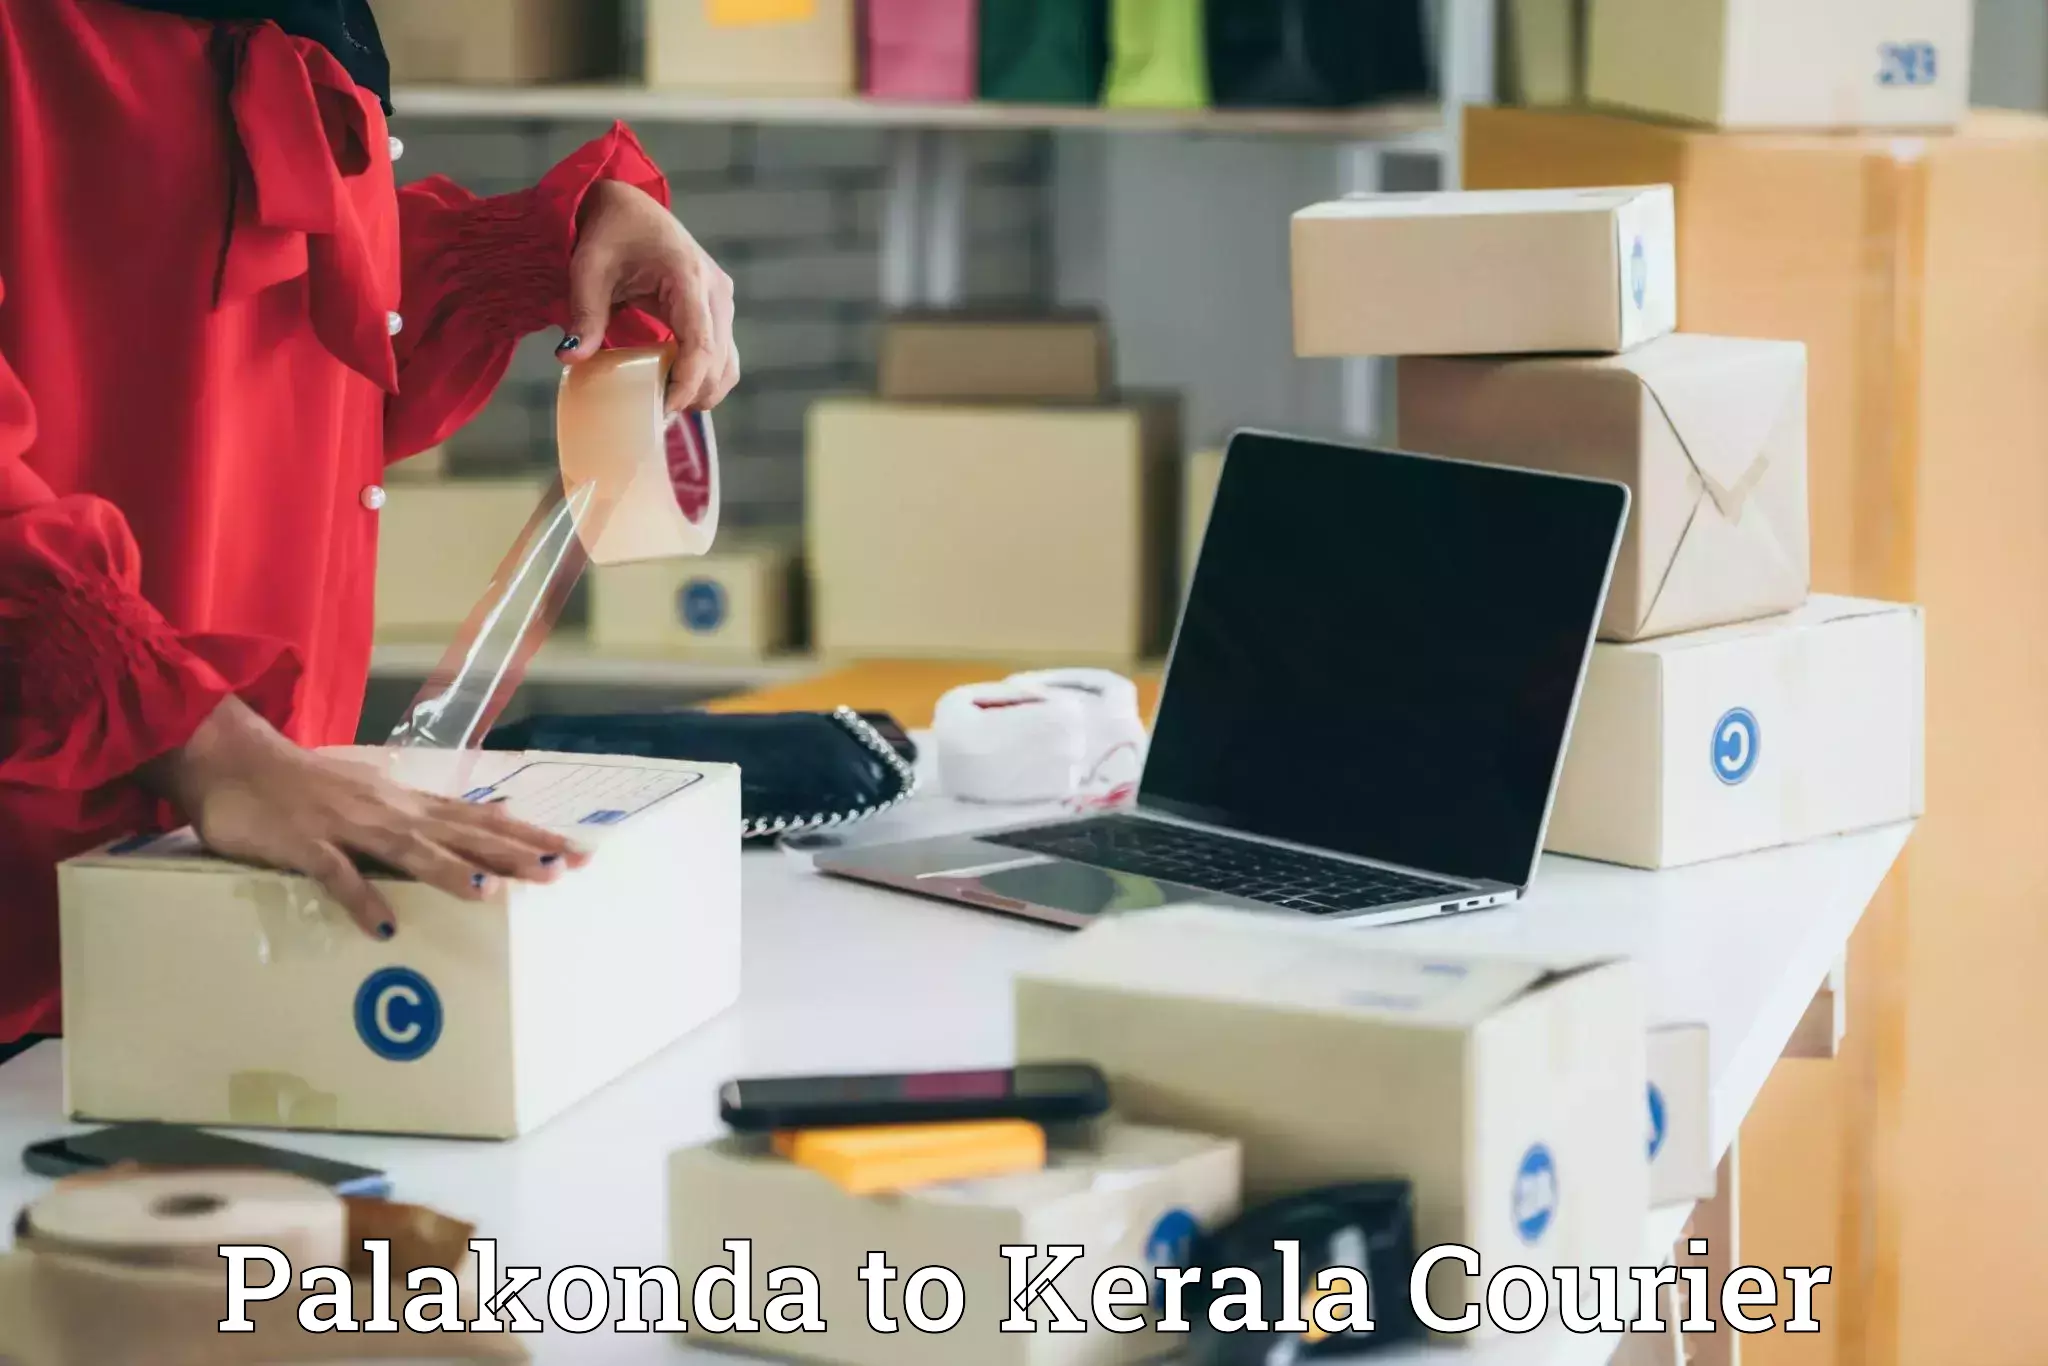 Same-day delivery solutions Palakonda to Kerala